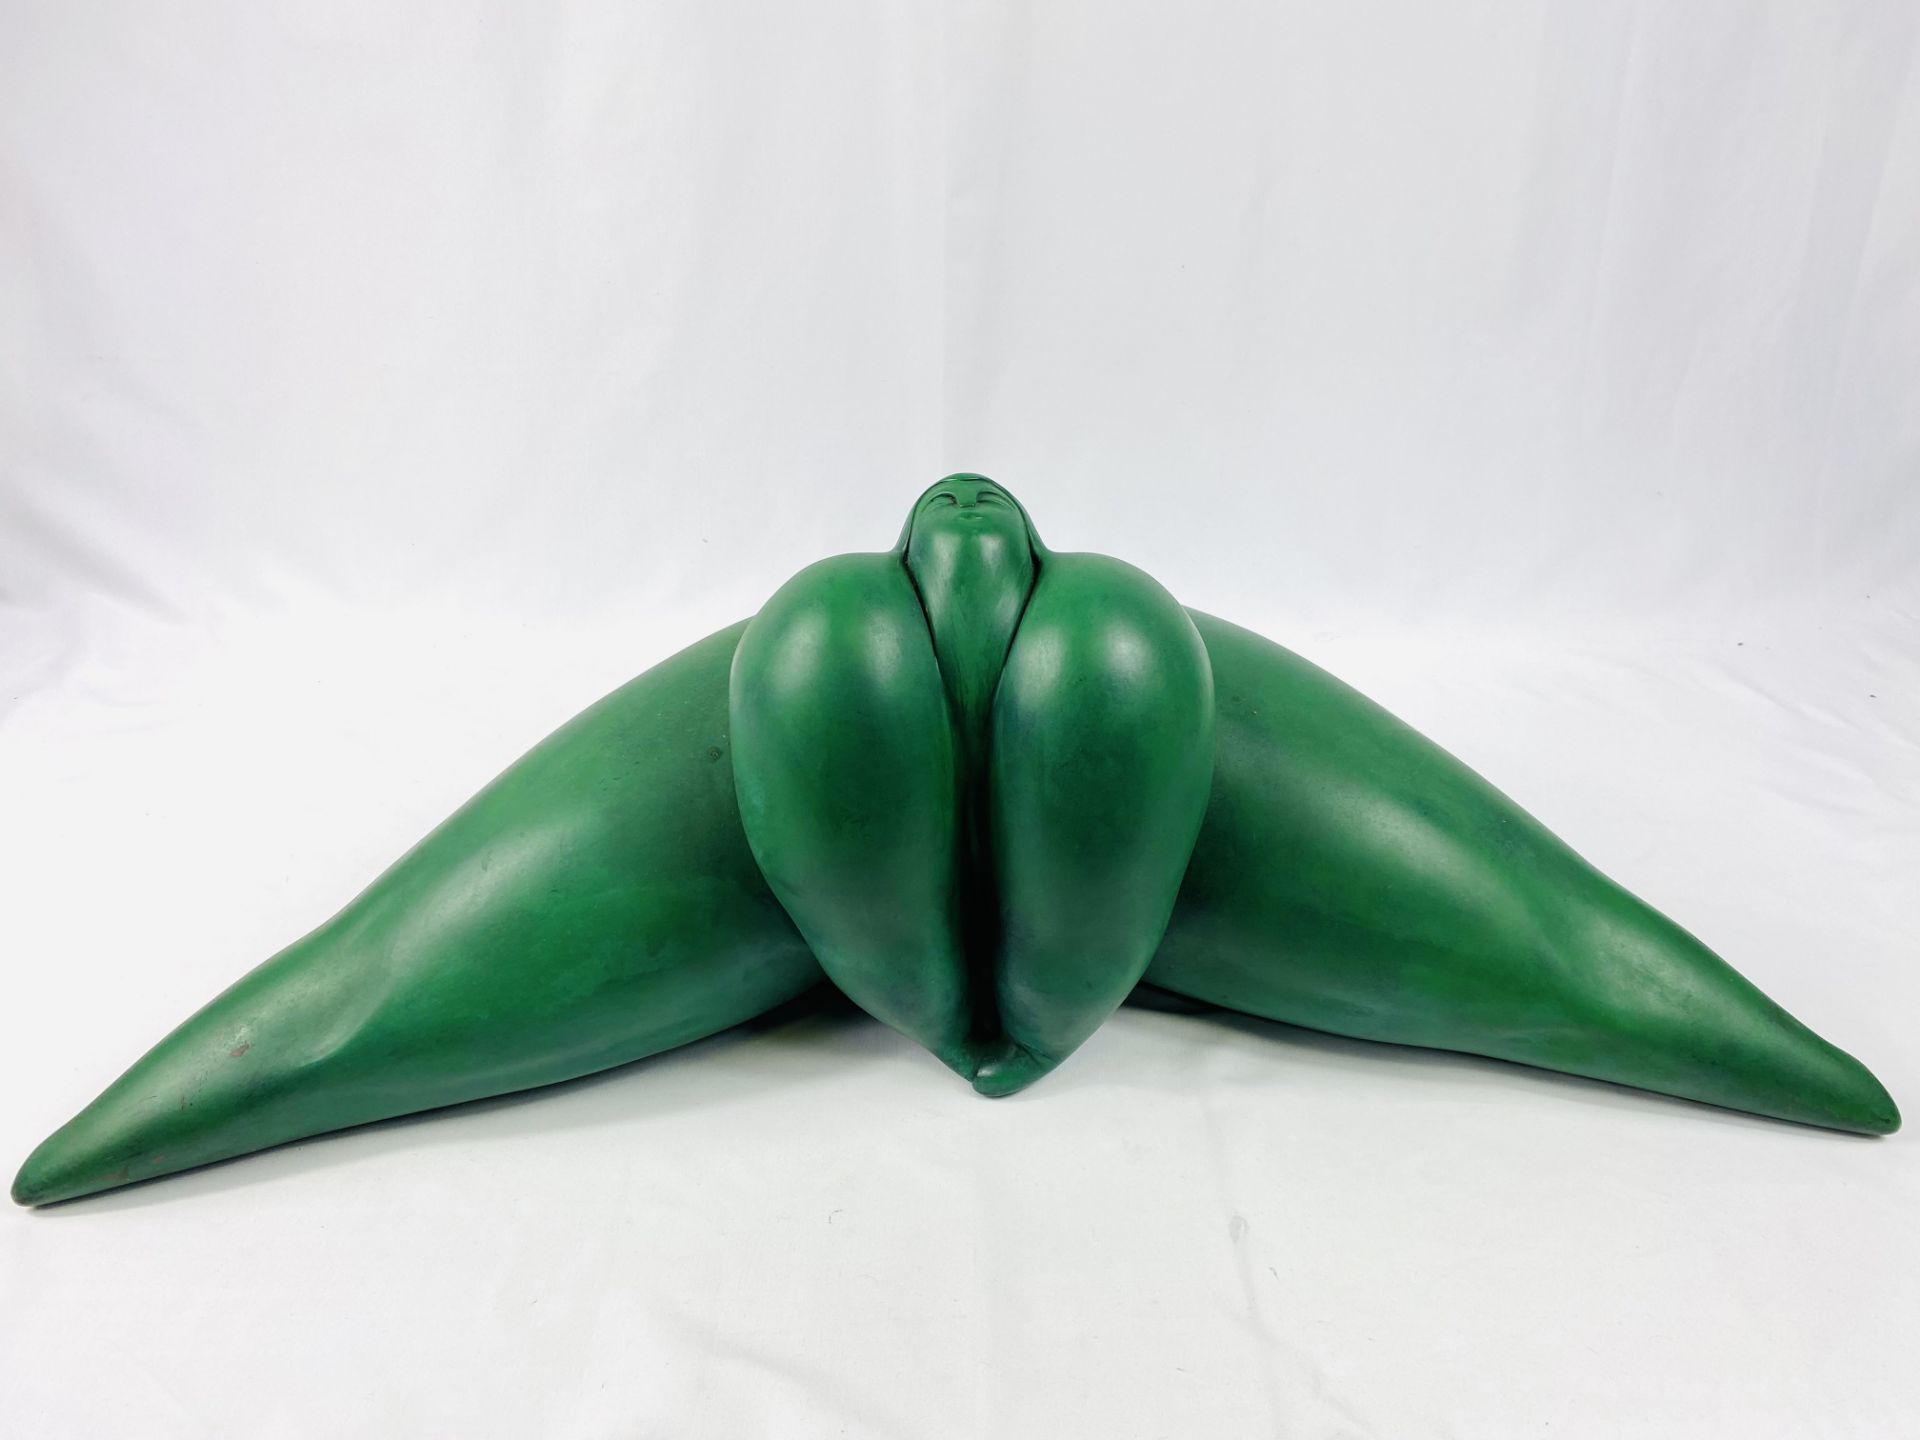 Green composite stone sculpture